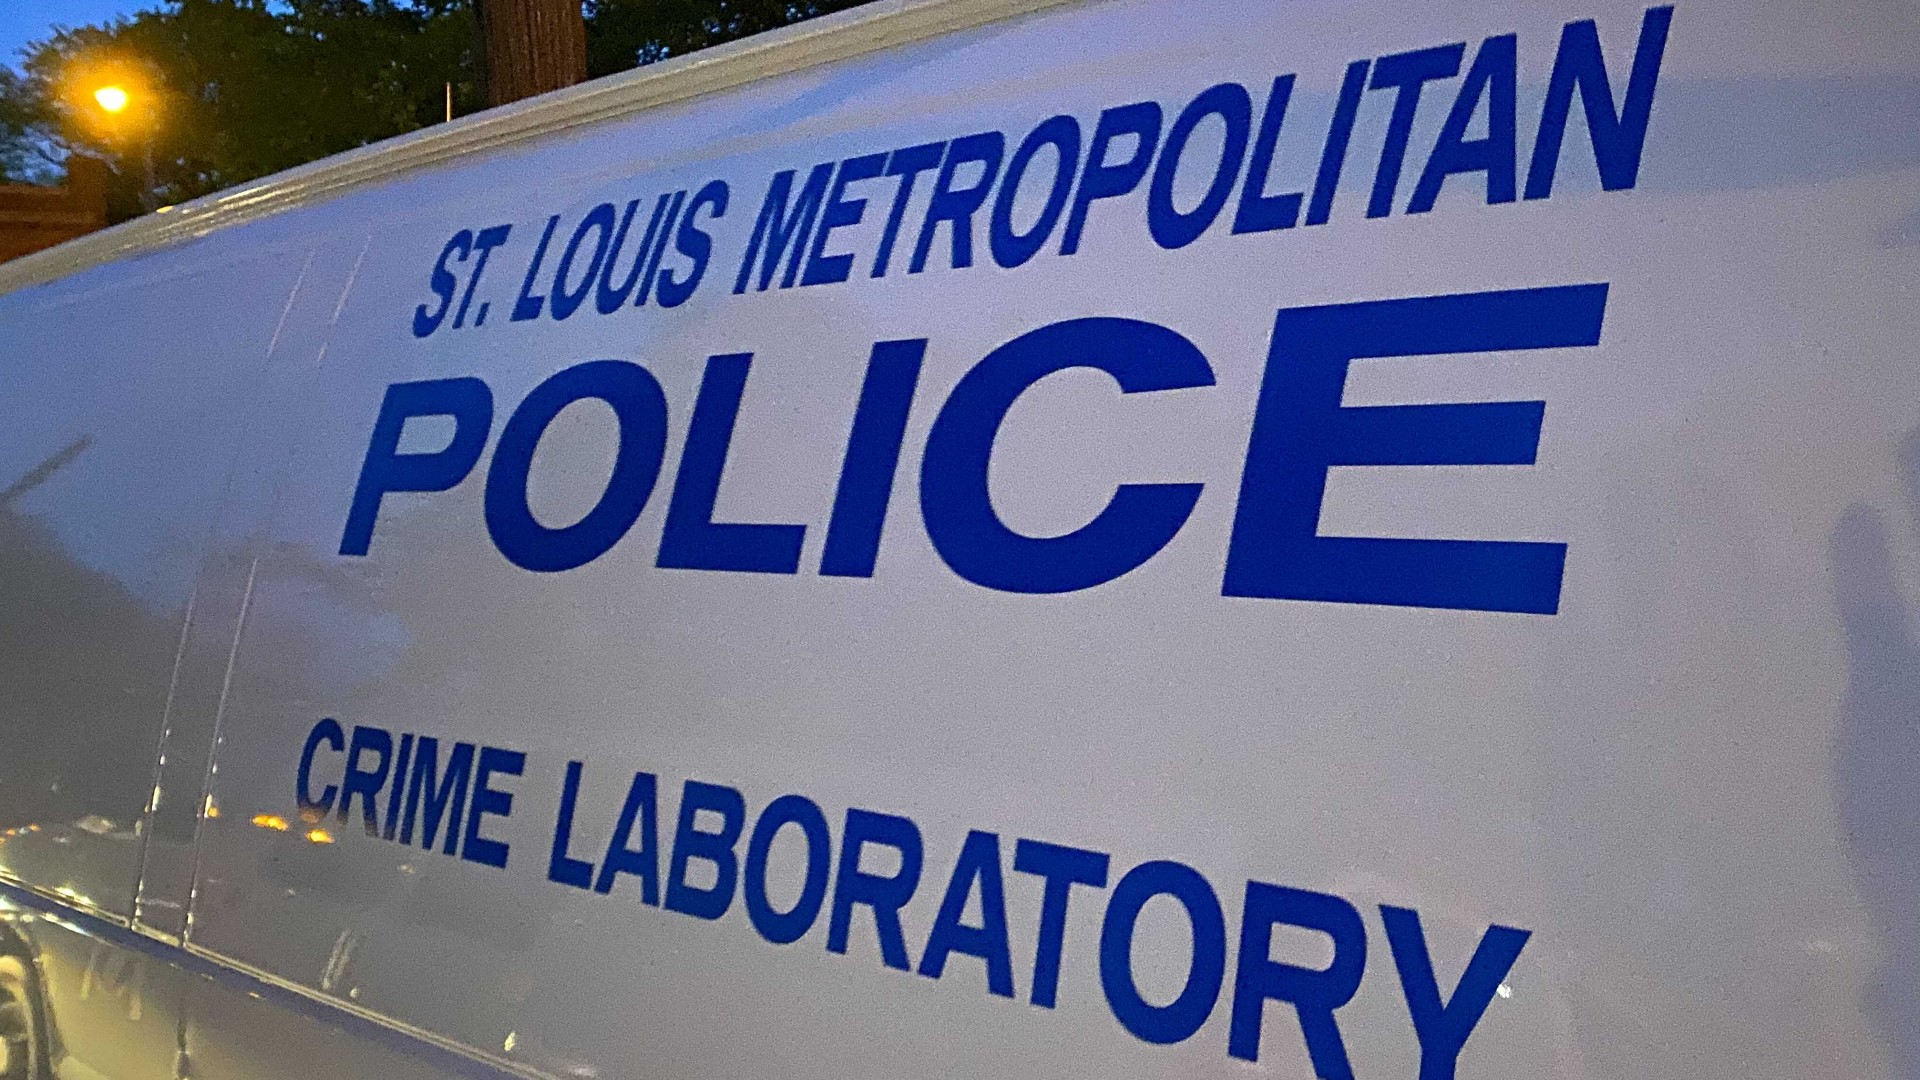 In 2021, 46 children have been shot in St. Louis